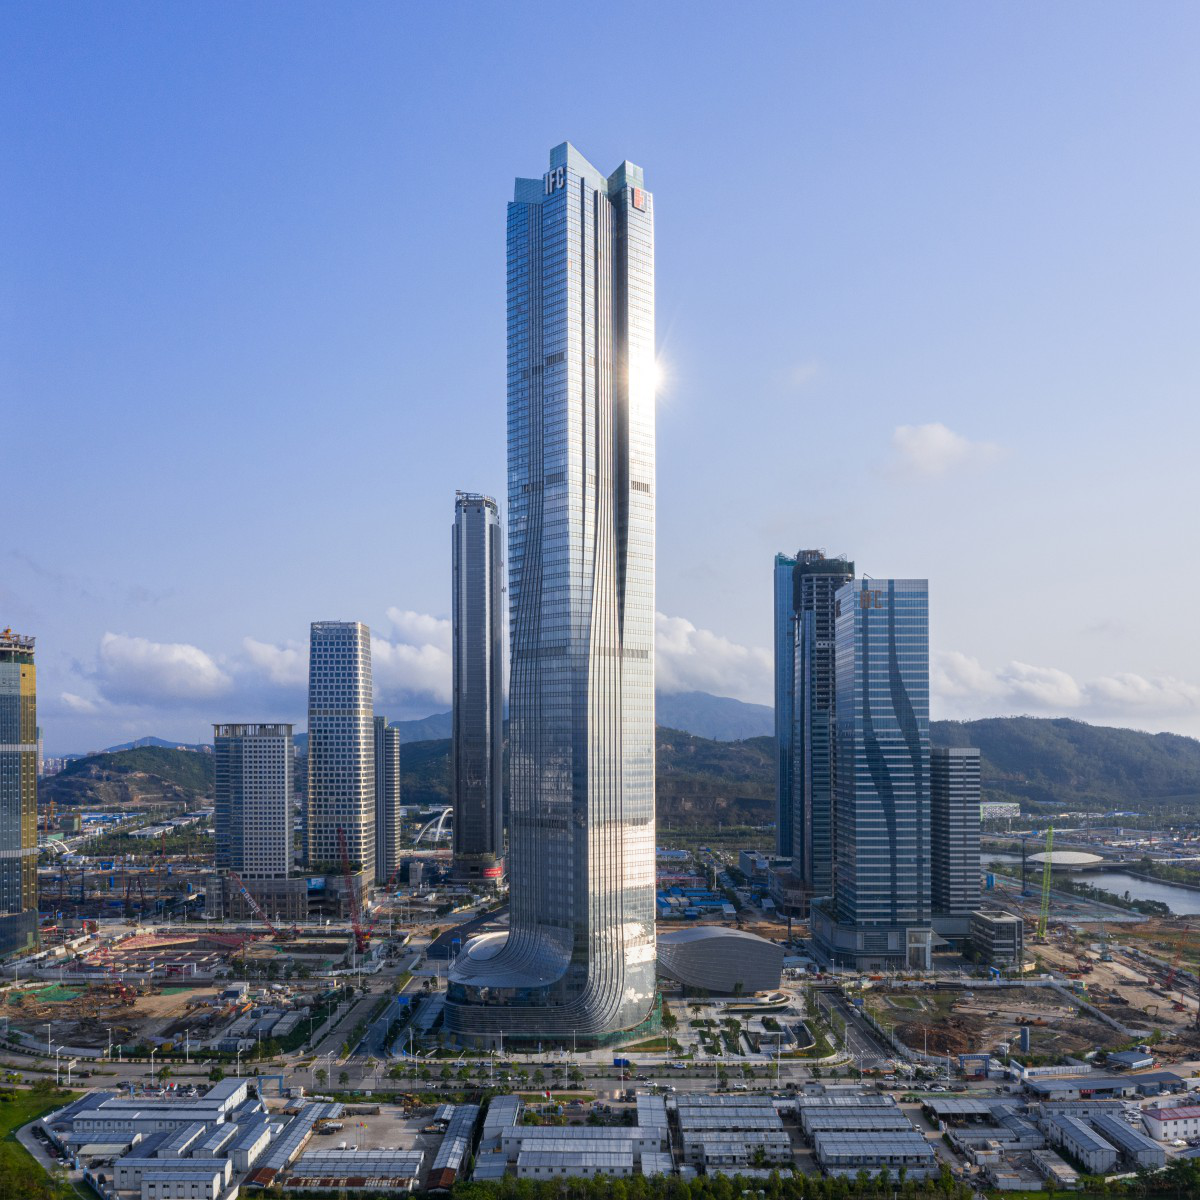 Hengqin International Financial Center Office by Aedas Platinum Architecture, Building and Structure Design Award Winner 2021 